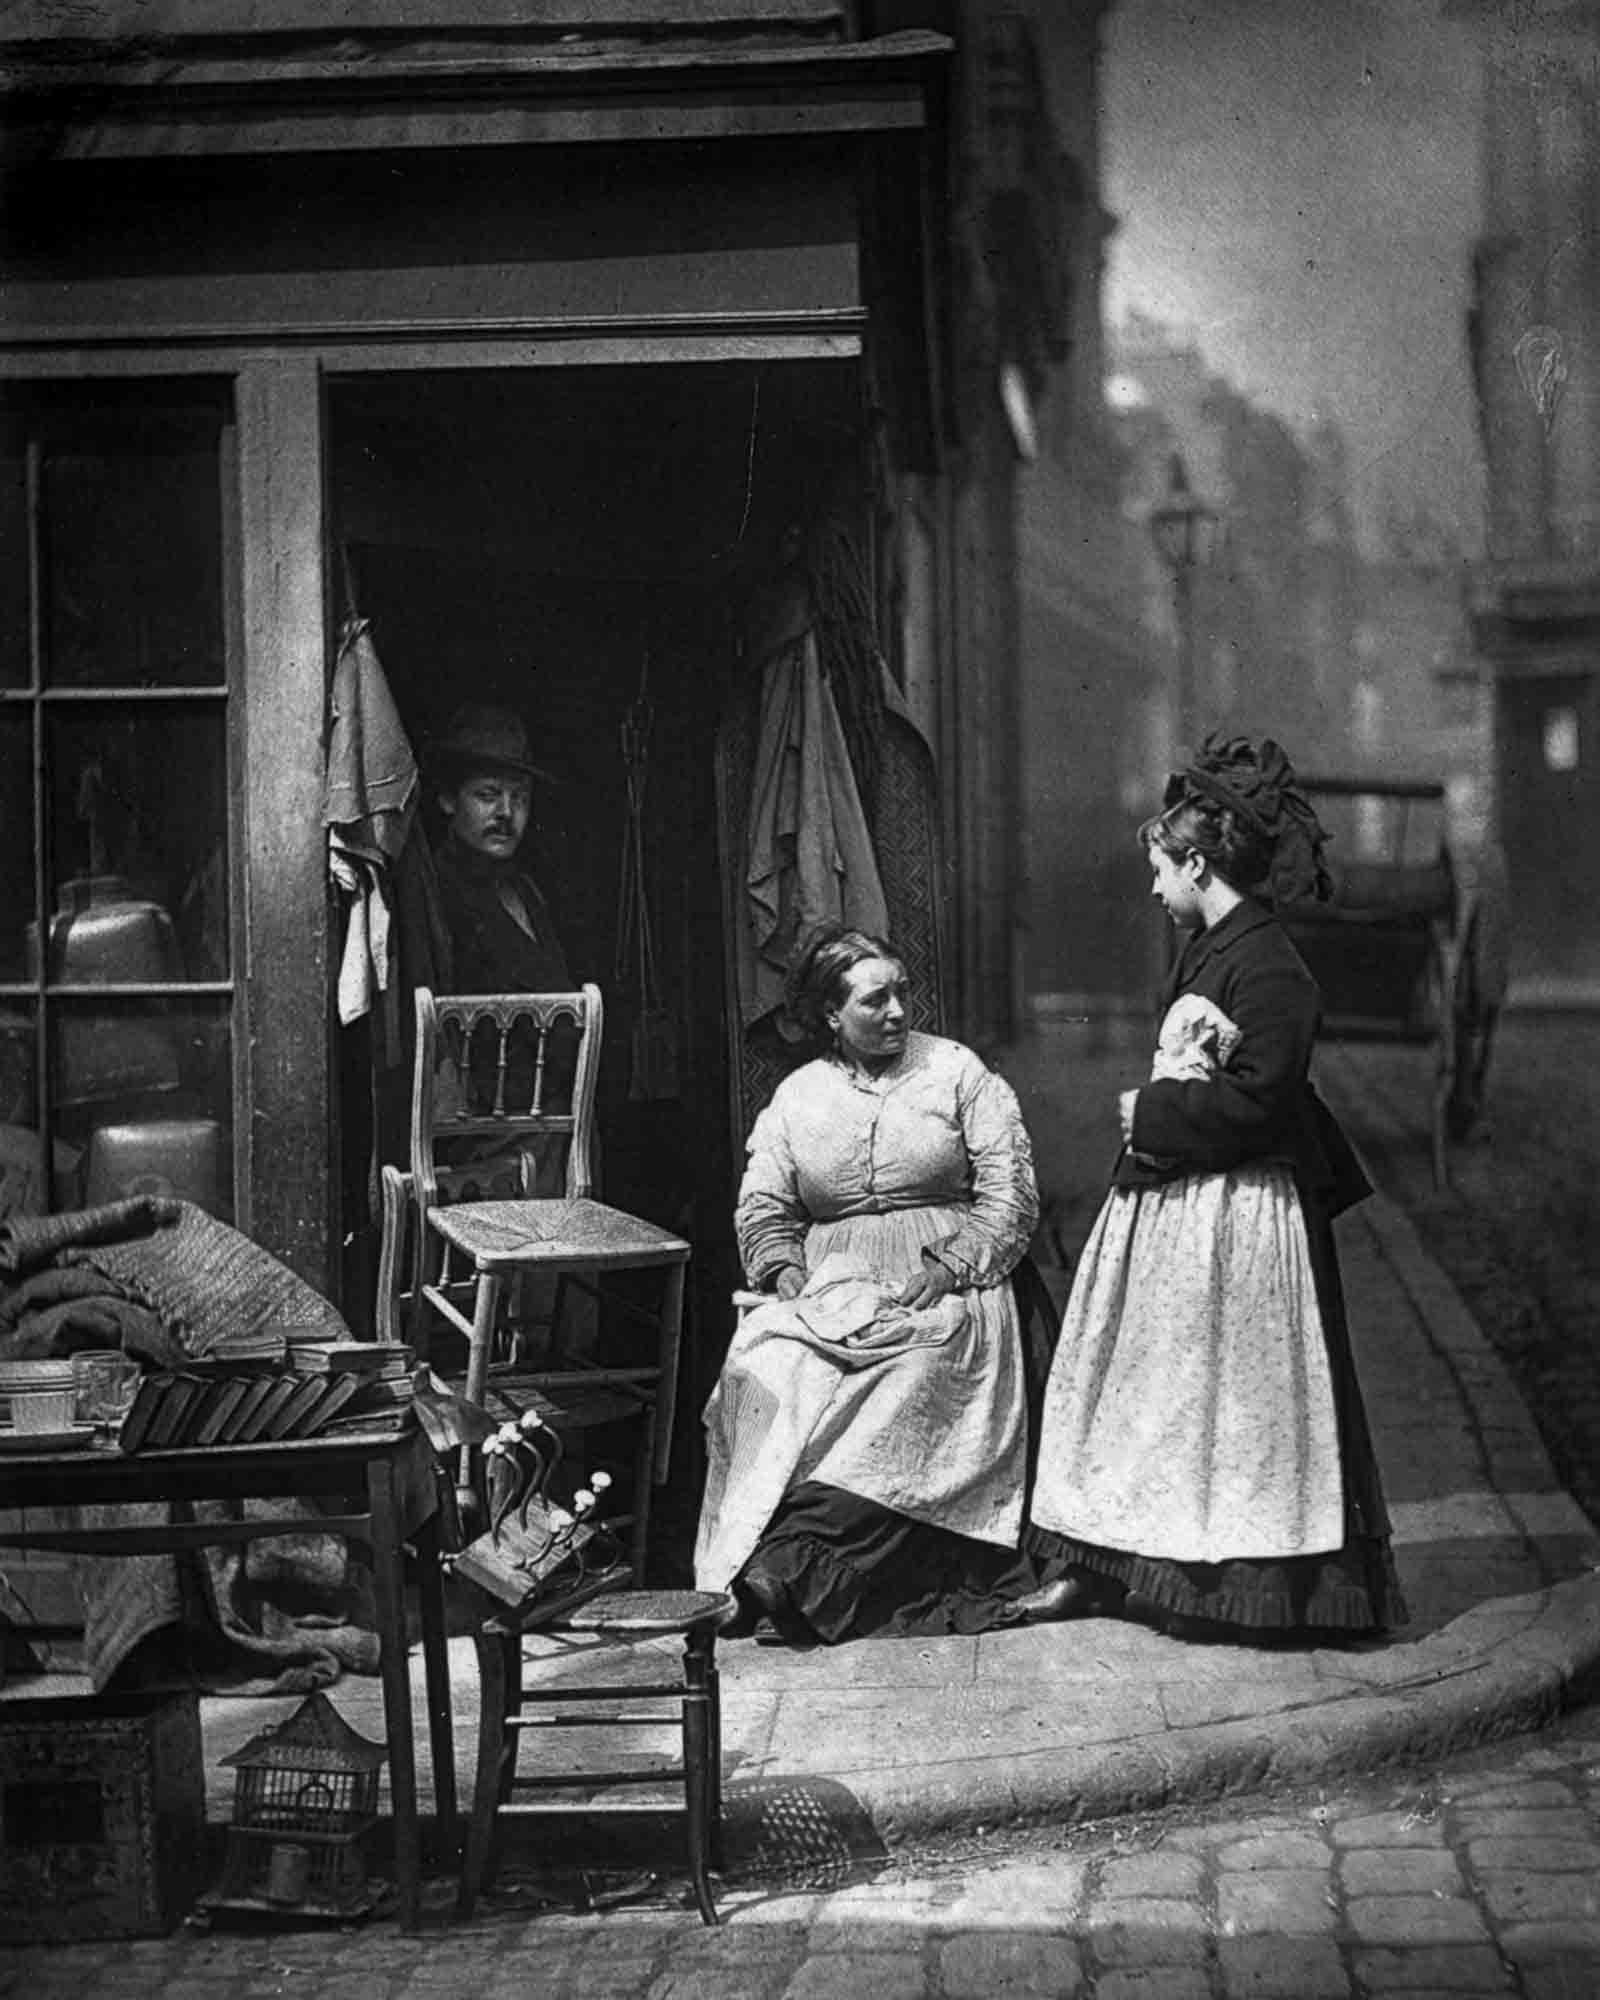 A secondhand furniture shop, 1877.